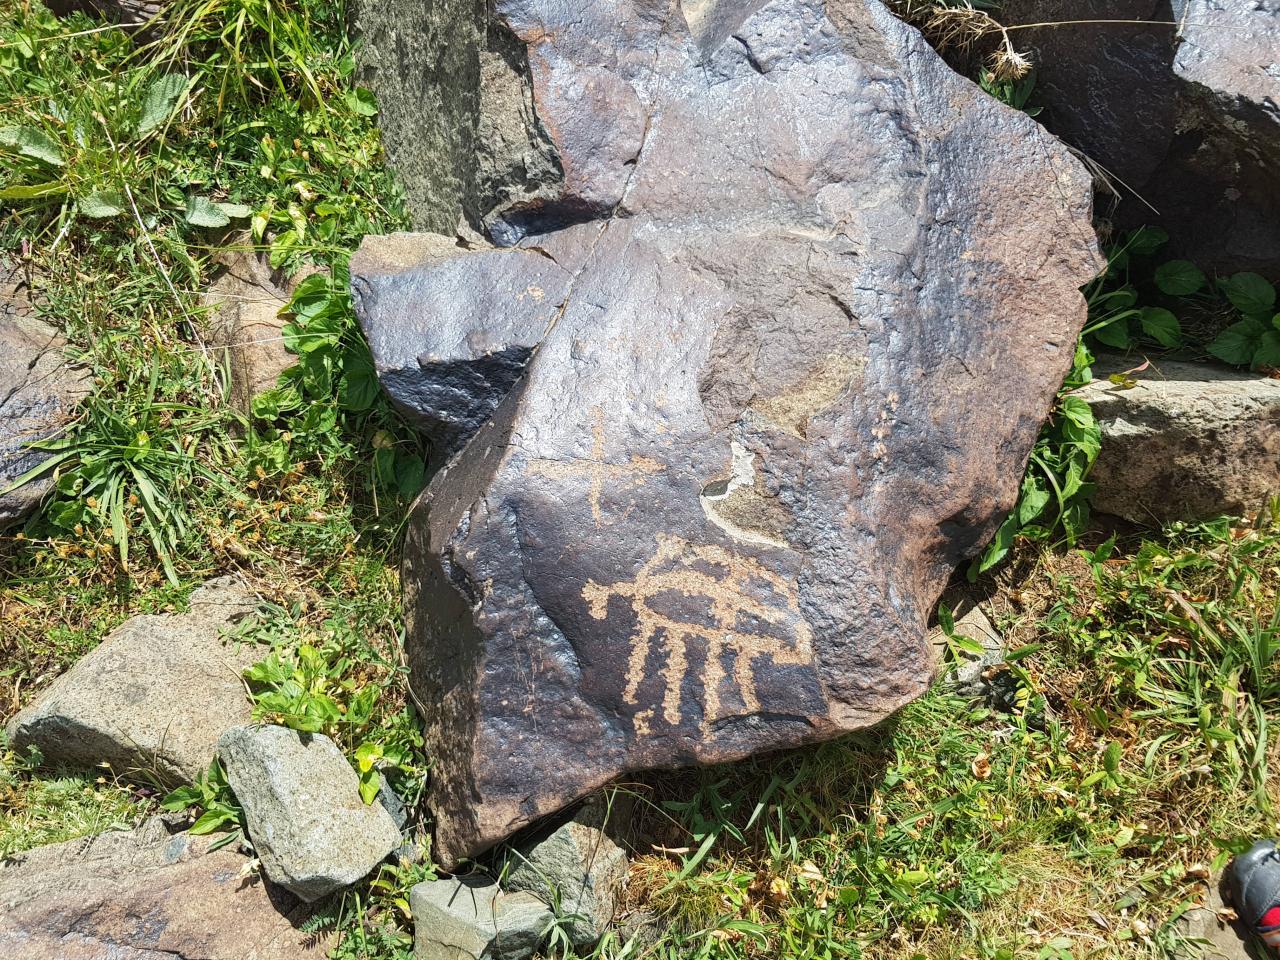 Gamigaya rock art attracts curious visitors